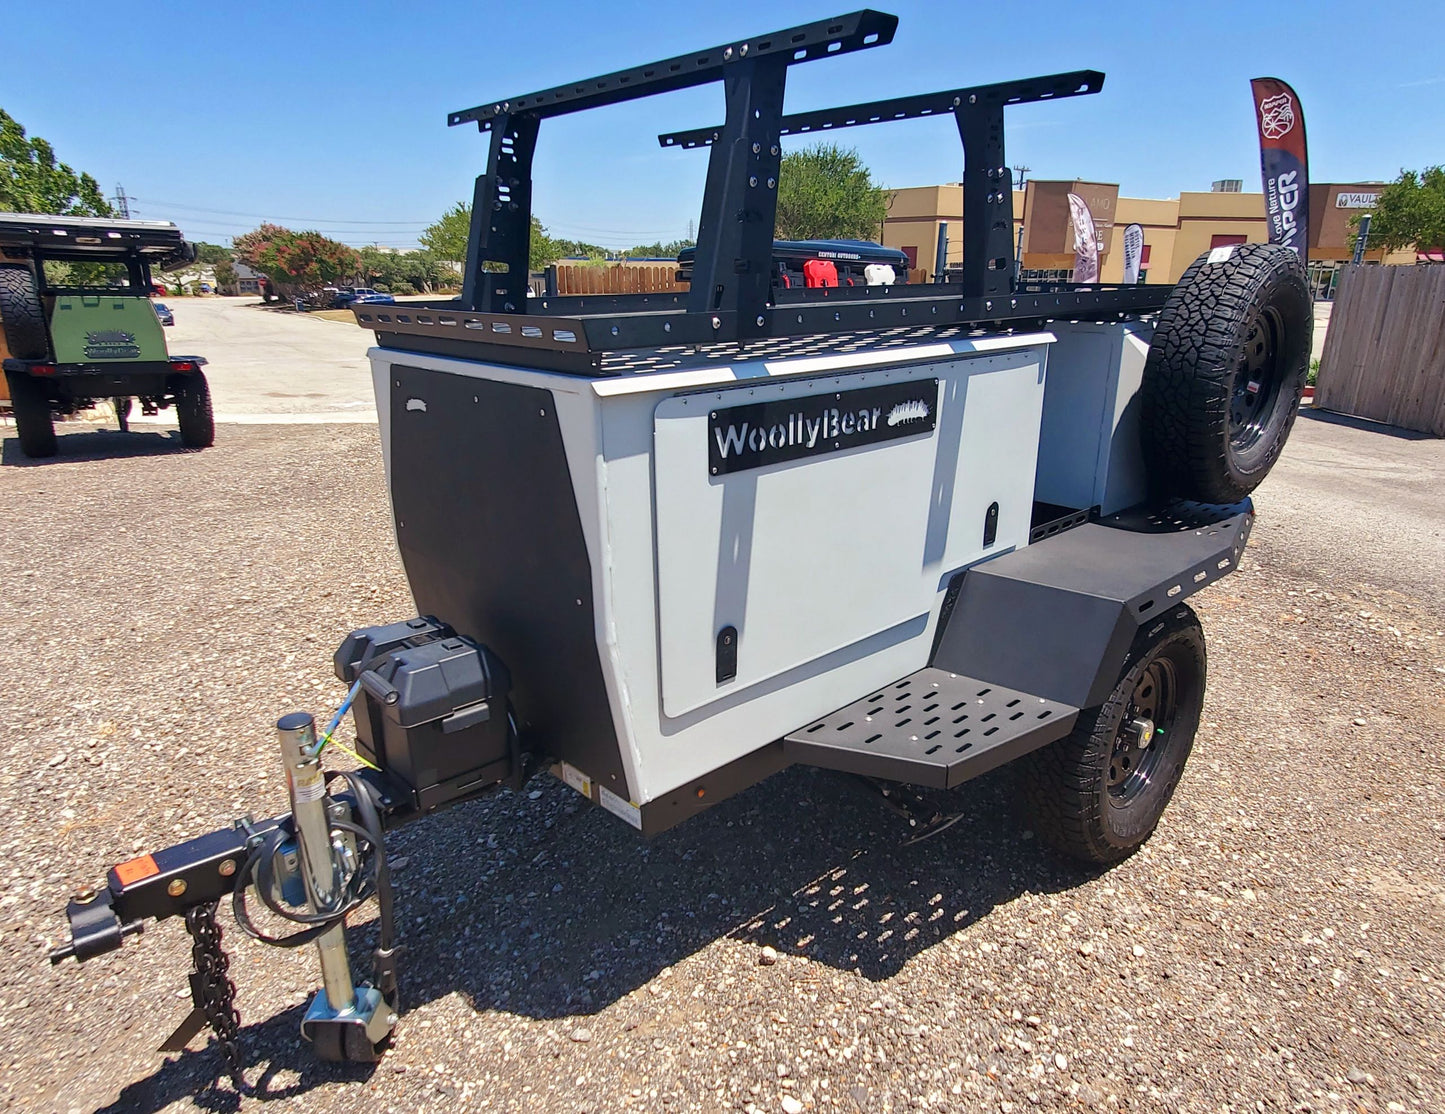 taxa outdoors woollybear base trailer for sale in san antonio texas at hawkes outdoors 2102512882